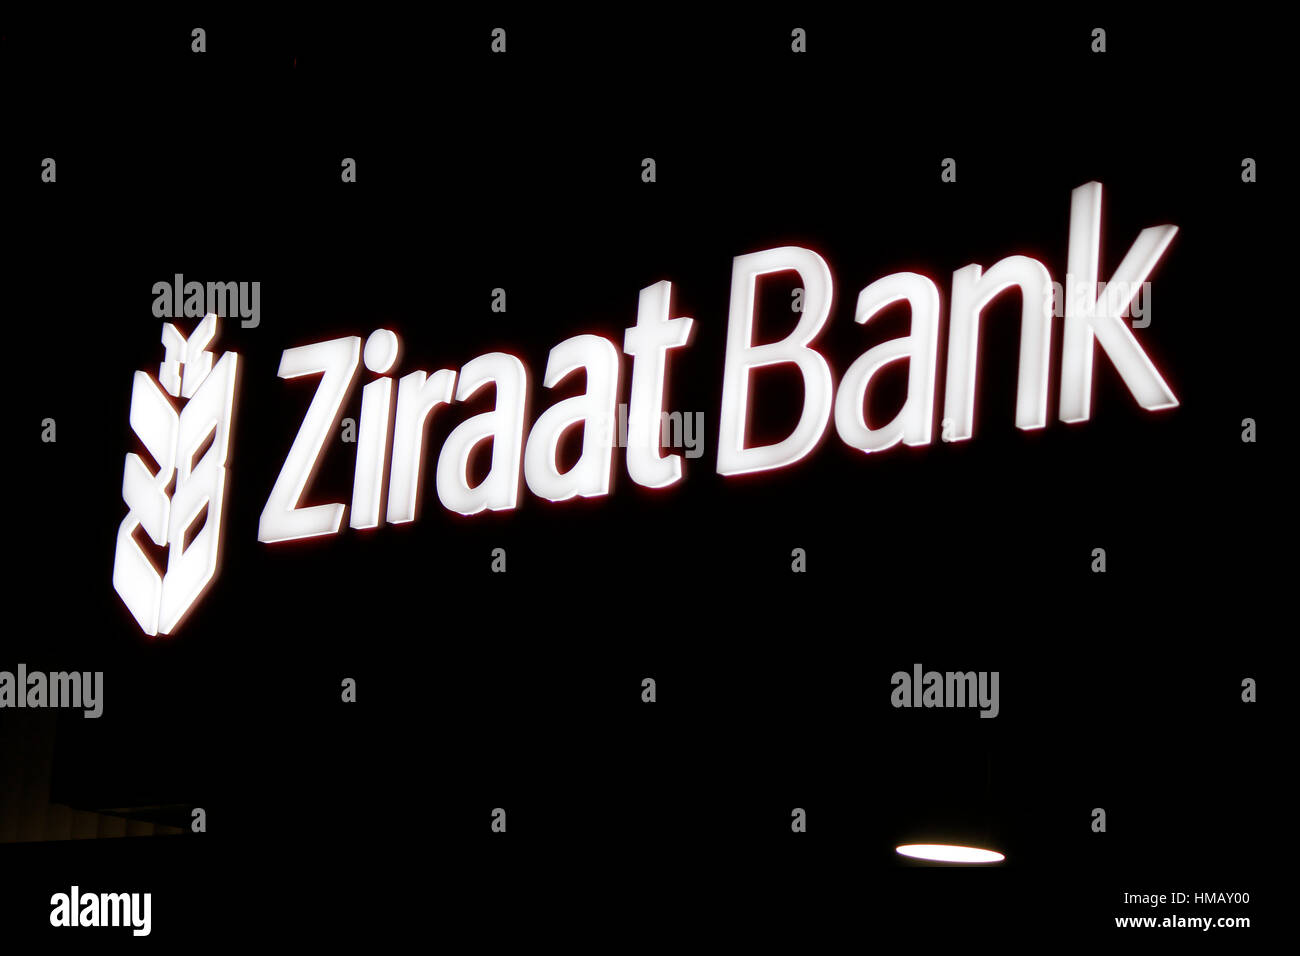 Das Logo der Marke "Ziraat Bank", Berlin. Stockfoto